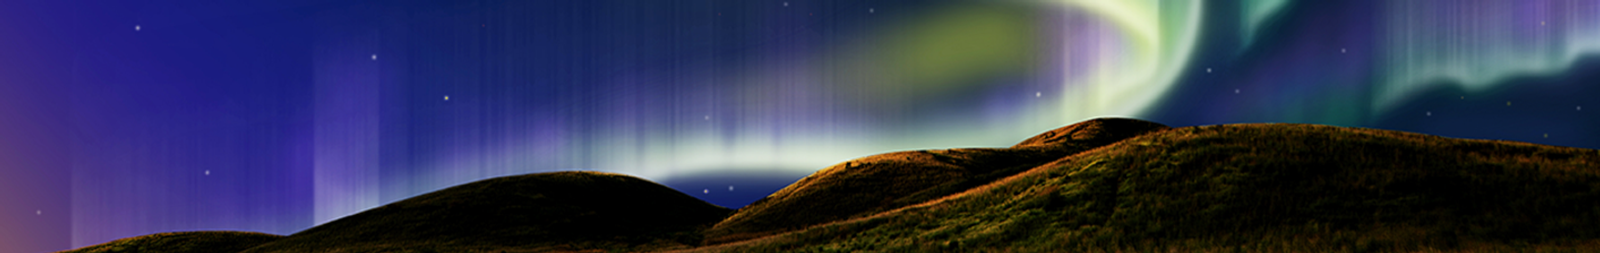 aurora borealis imagery - green sky over hilltops